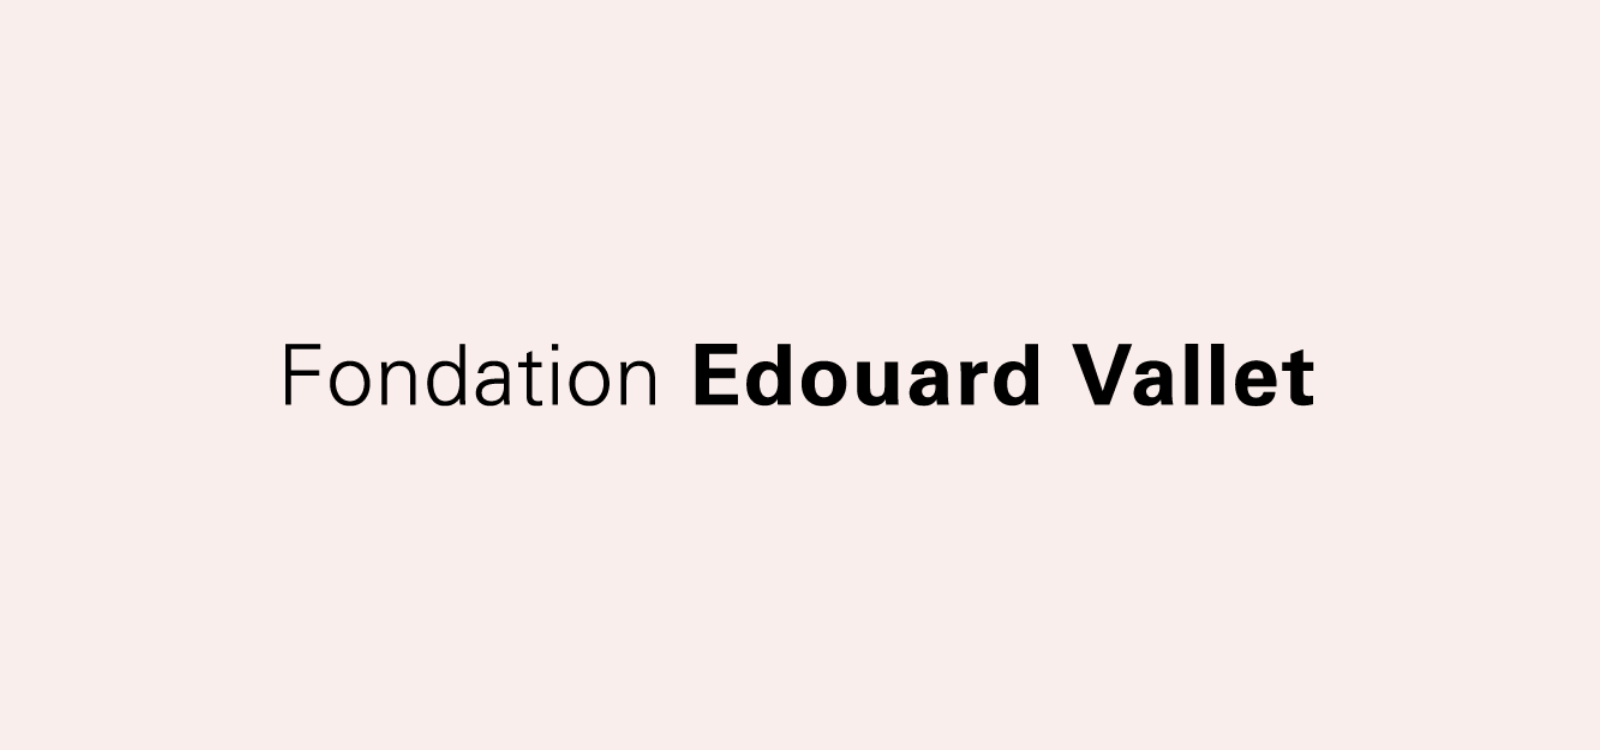 Projet Fondation Edouard Vallet - Fondation Minkoff